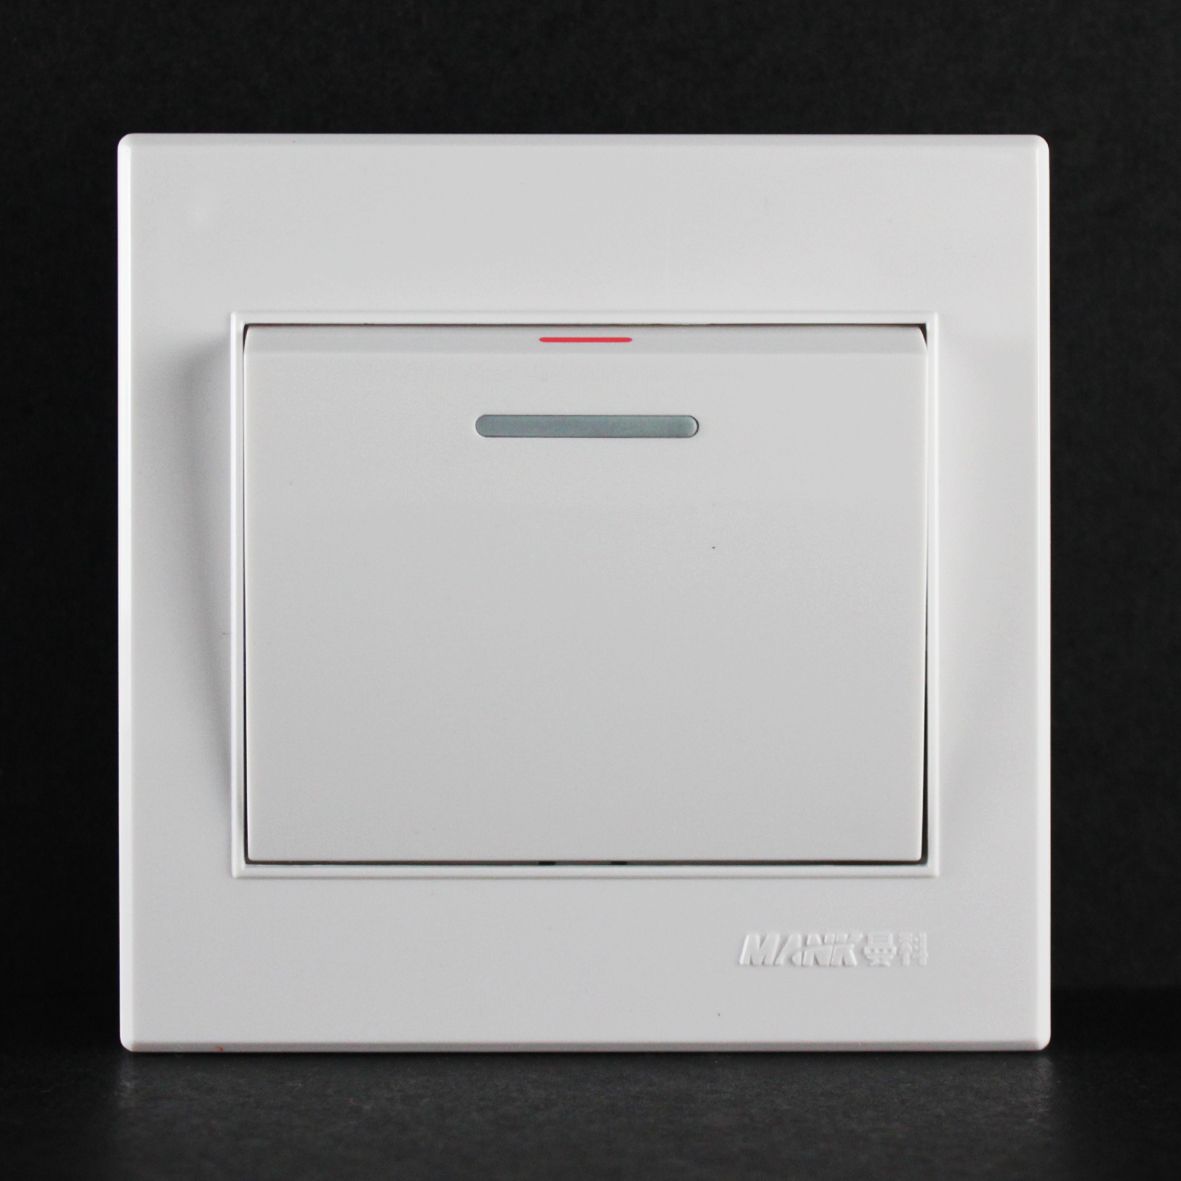 J1000-A large board switch